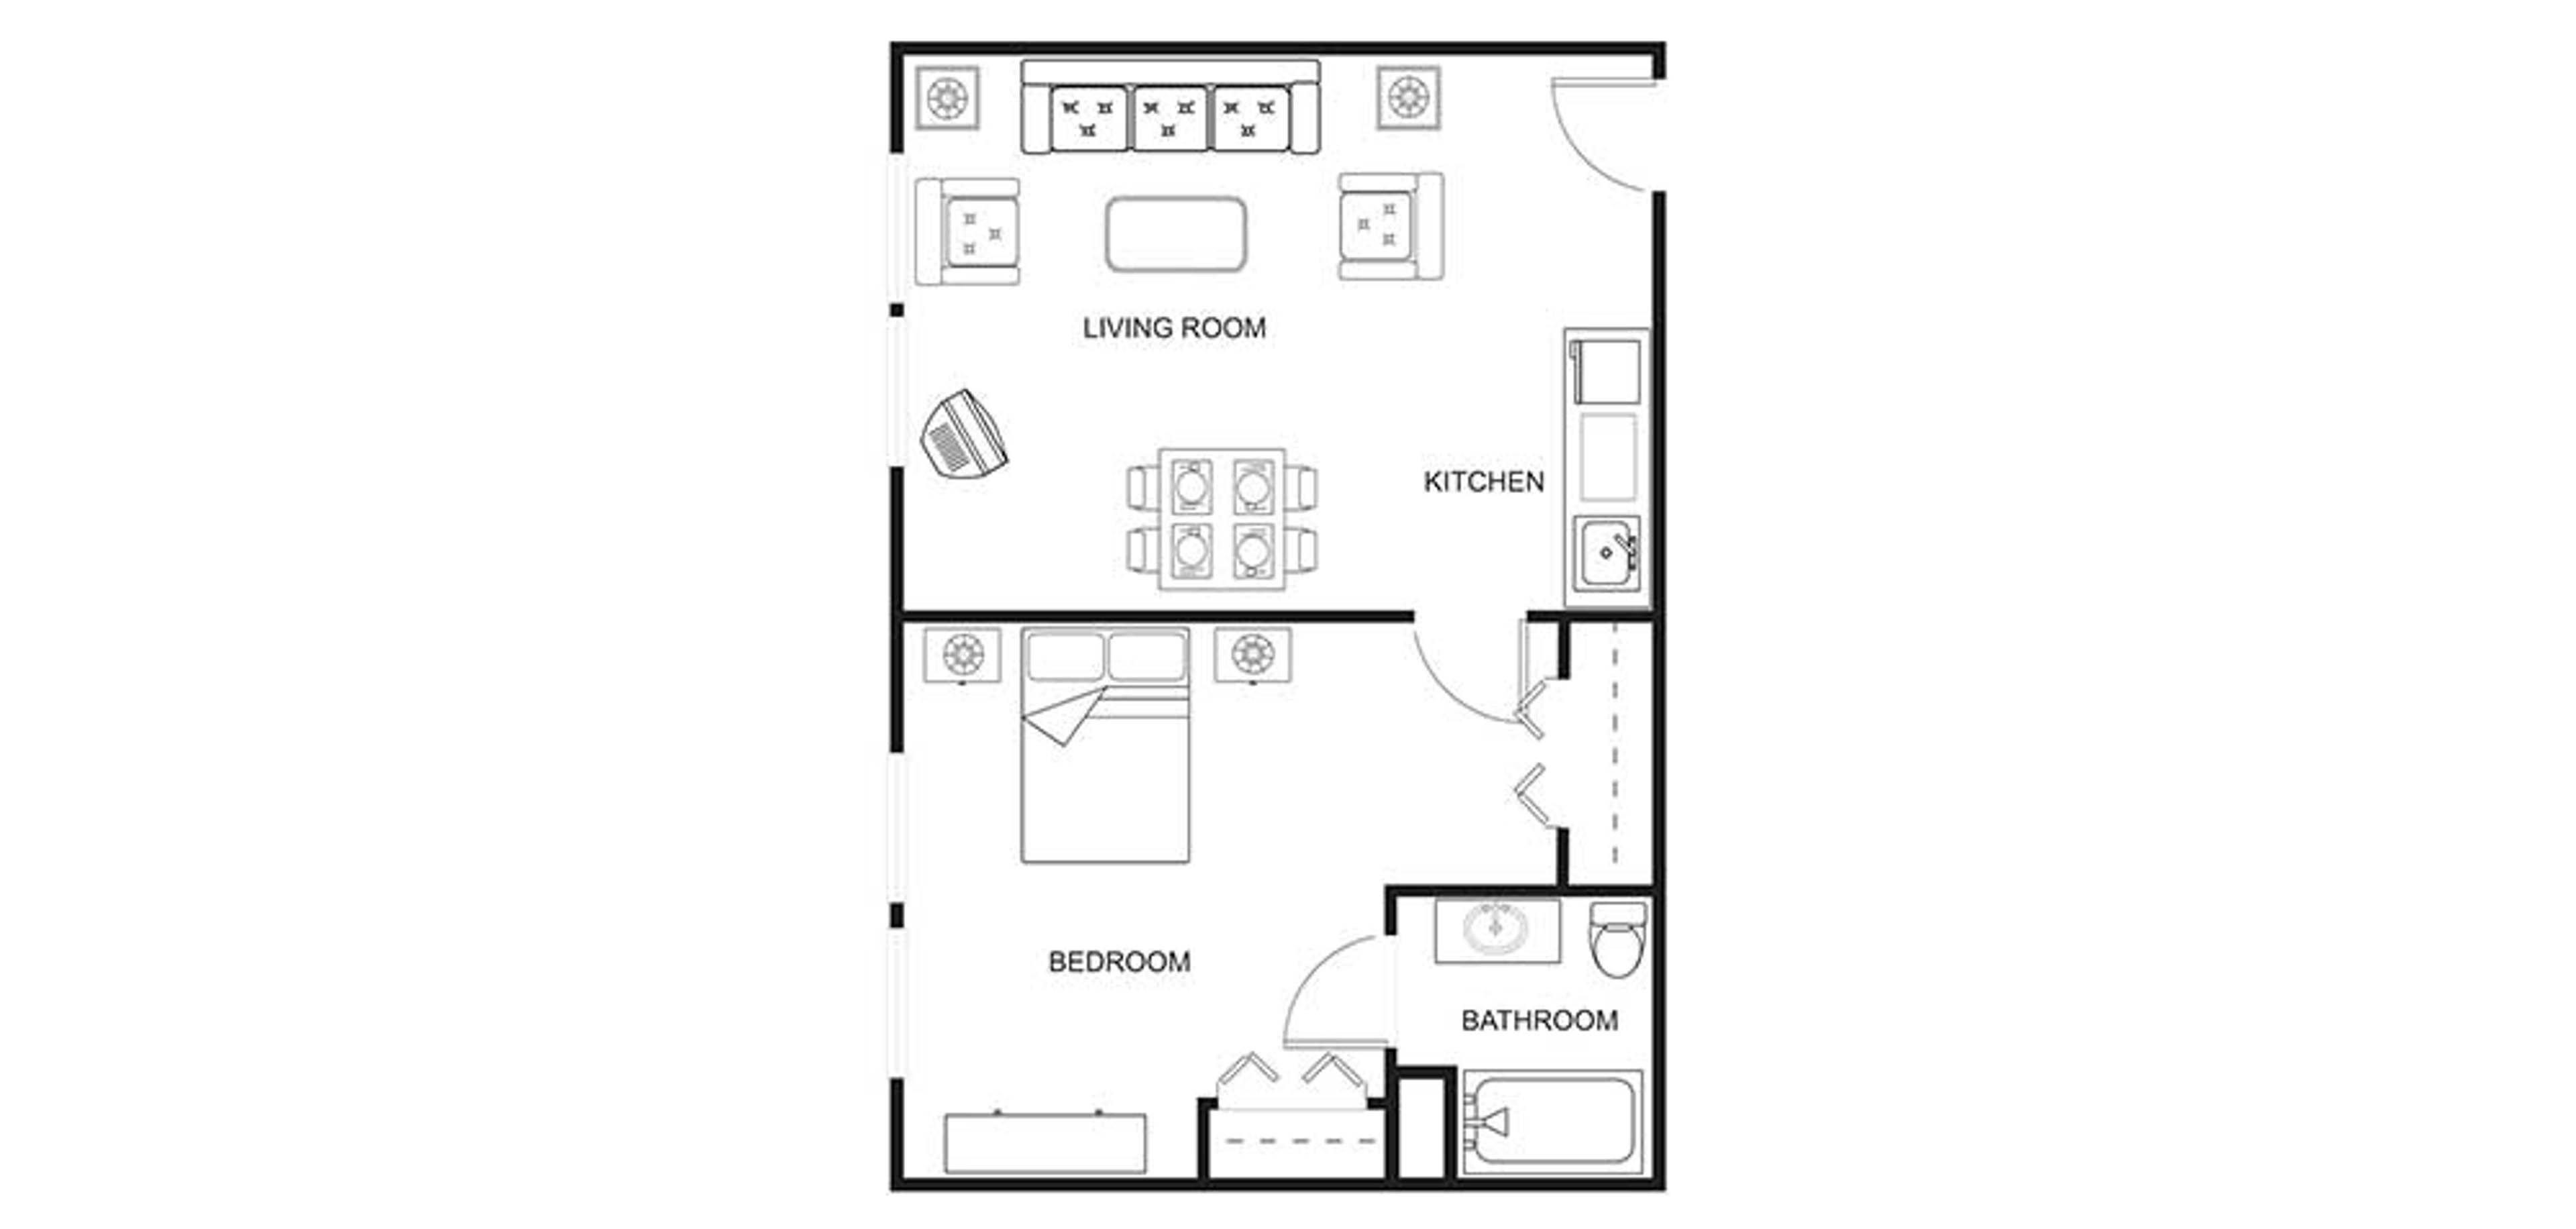 Floorplan - Pheasant Pointe - 1 bed, 1 bath, 570 sq. ft. Memory Care